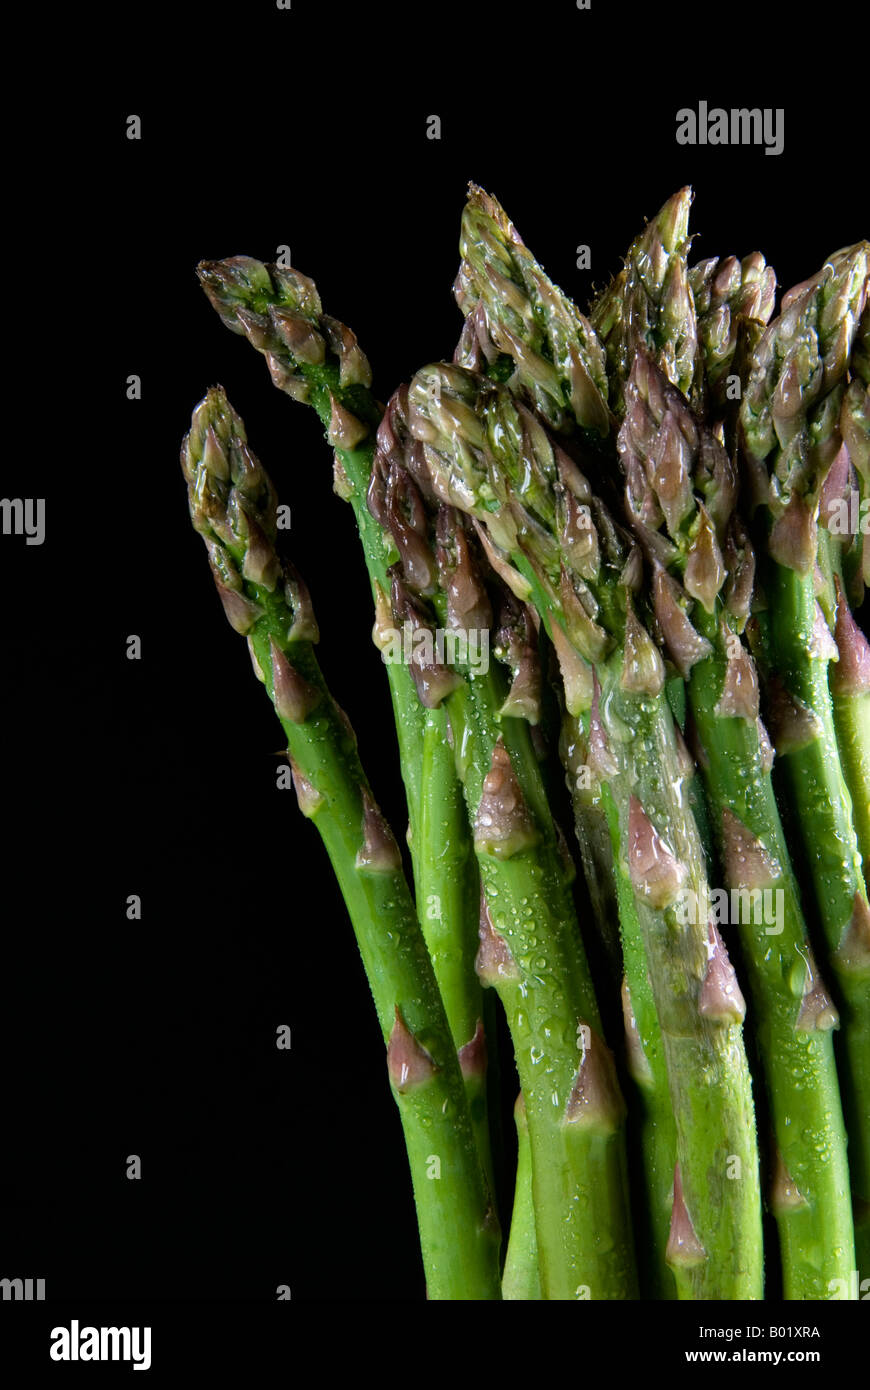 Asparagus Bundle ( Asparagus officinalis) Stock Photo